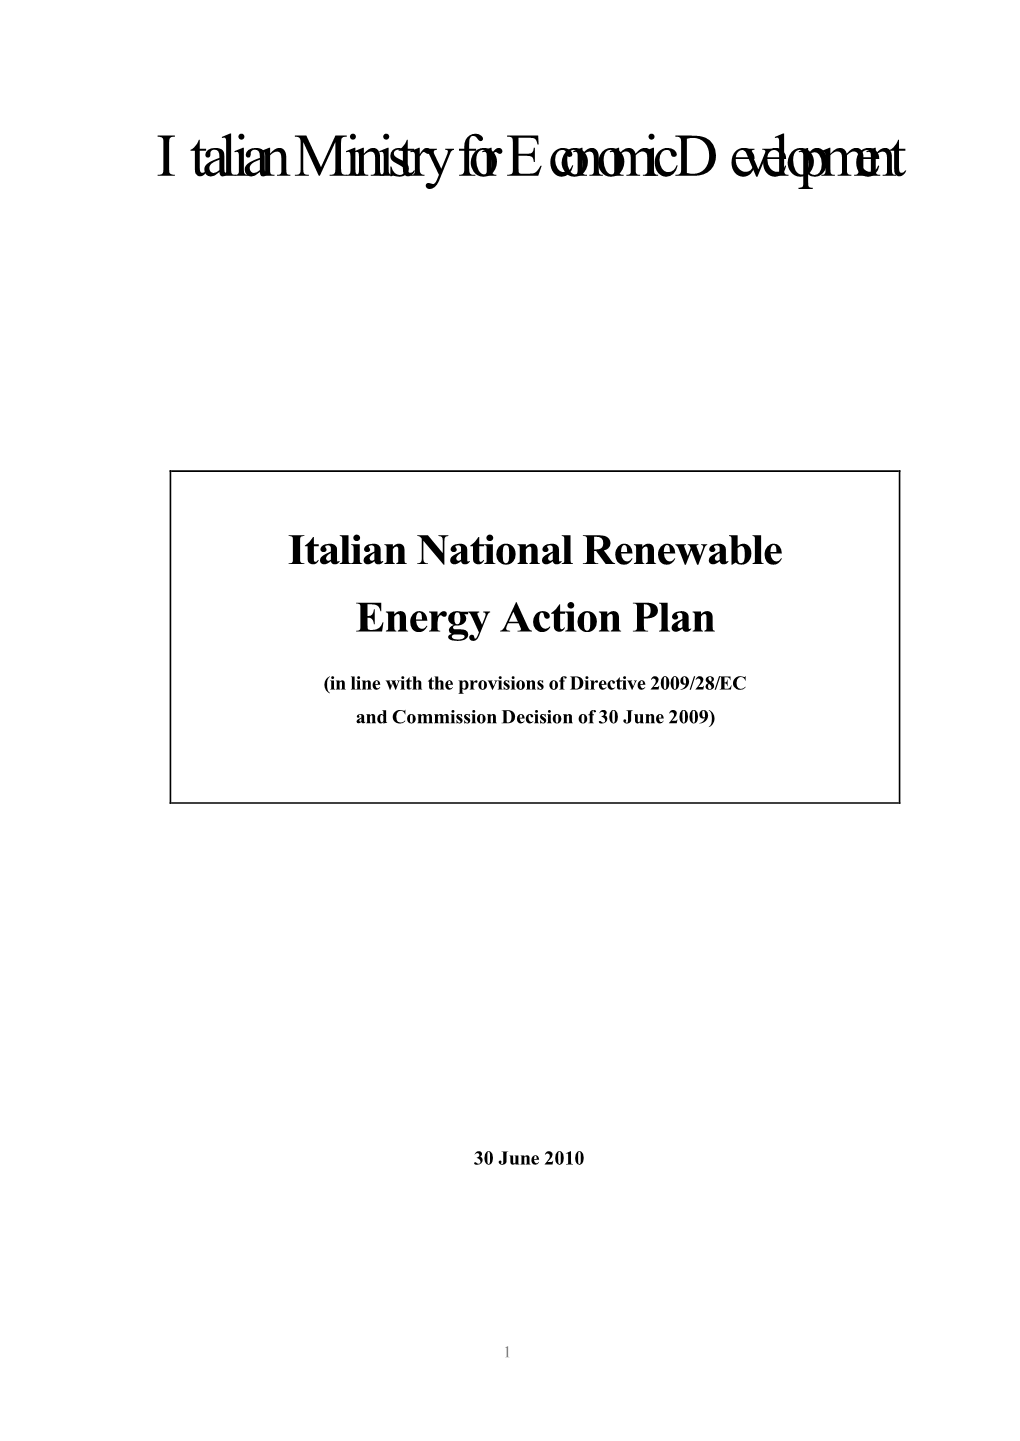 Italy National Renewable Energy Action Plan Italy En